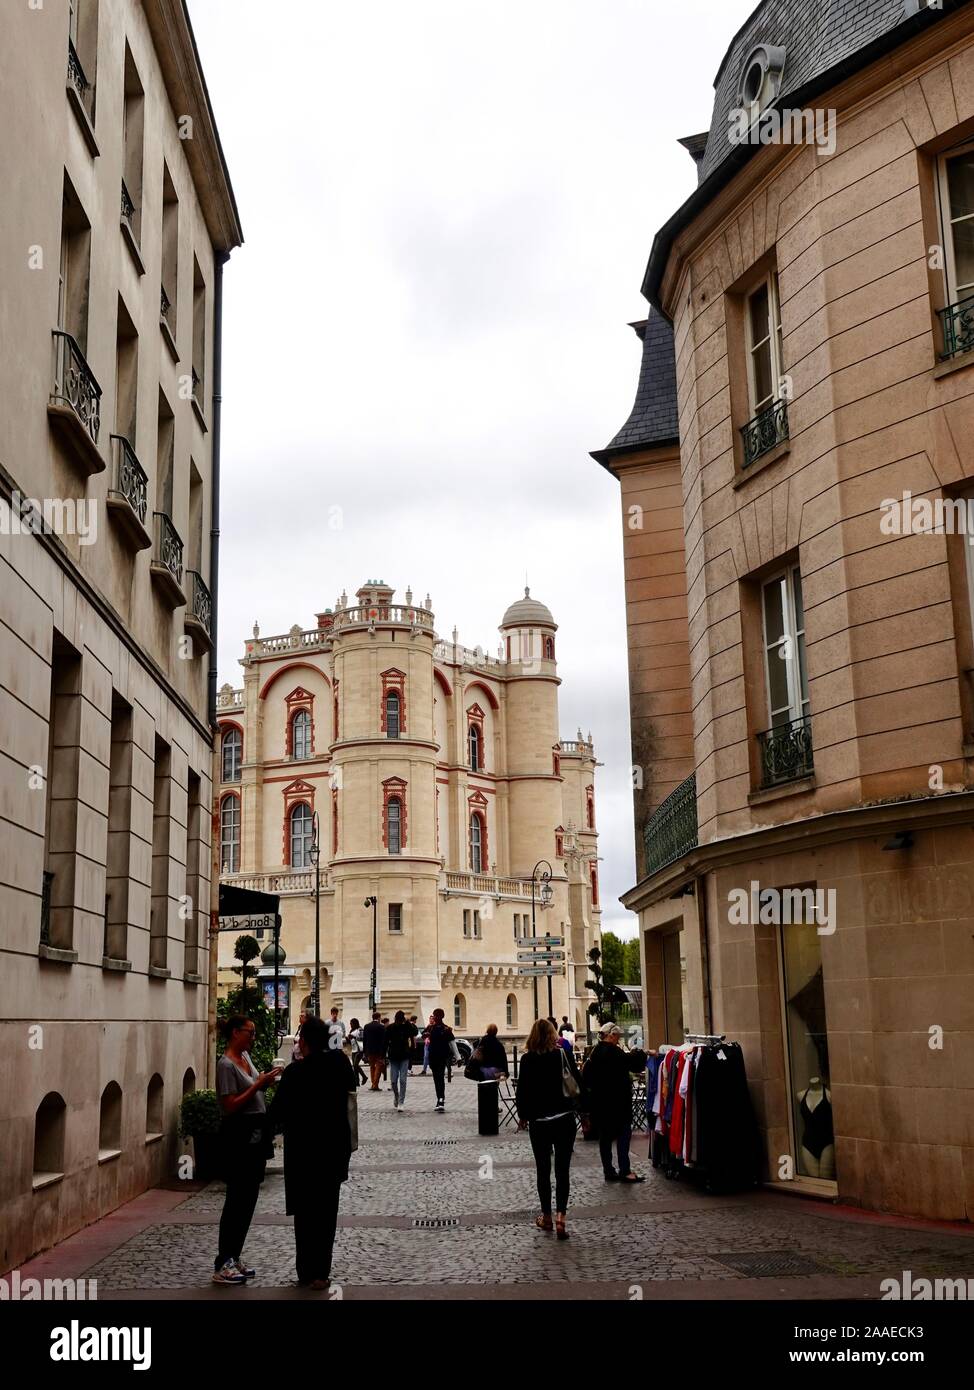 Shoppers, people, walking in the pedestrian area towards the Chateau, Saint-Germain-en-Laye, France. Stock Photo